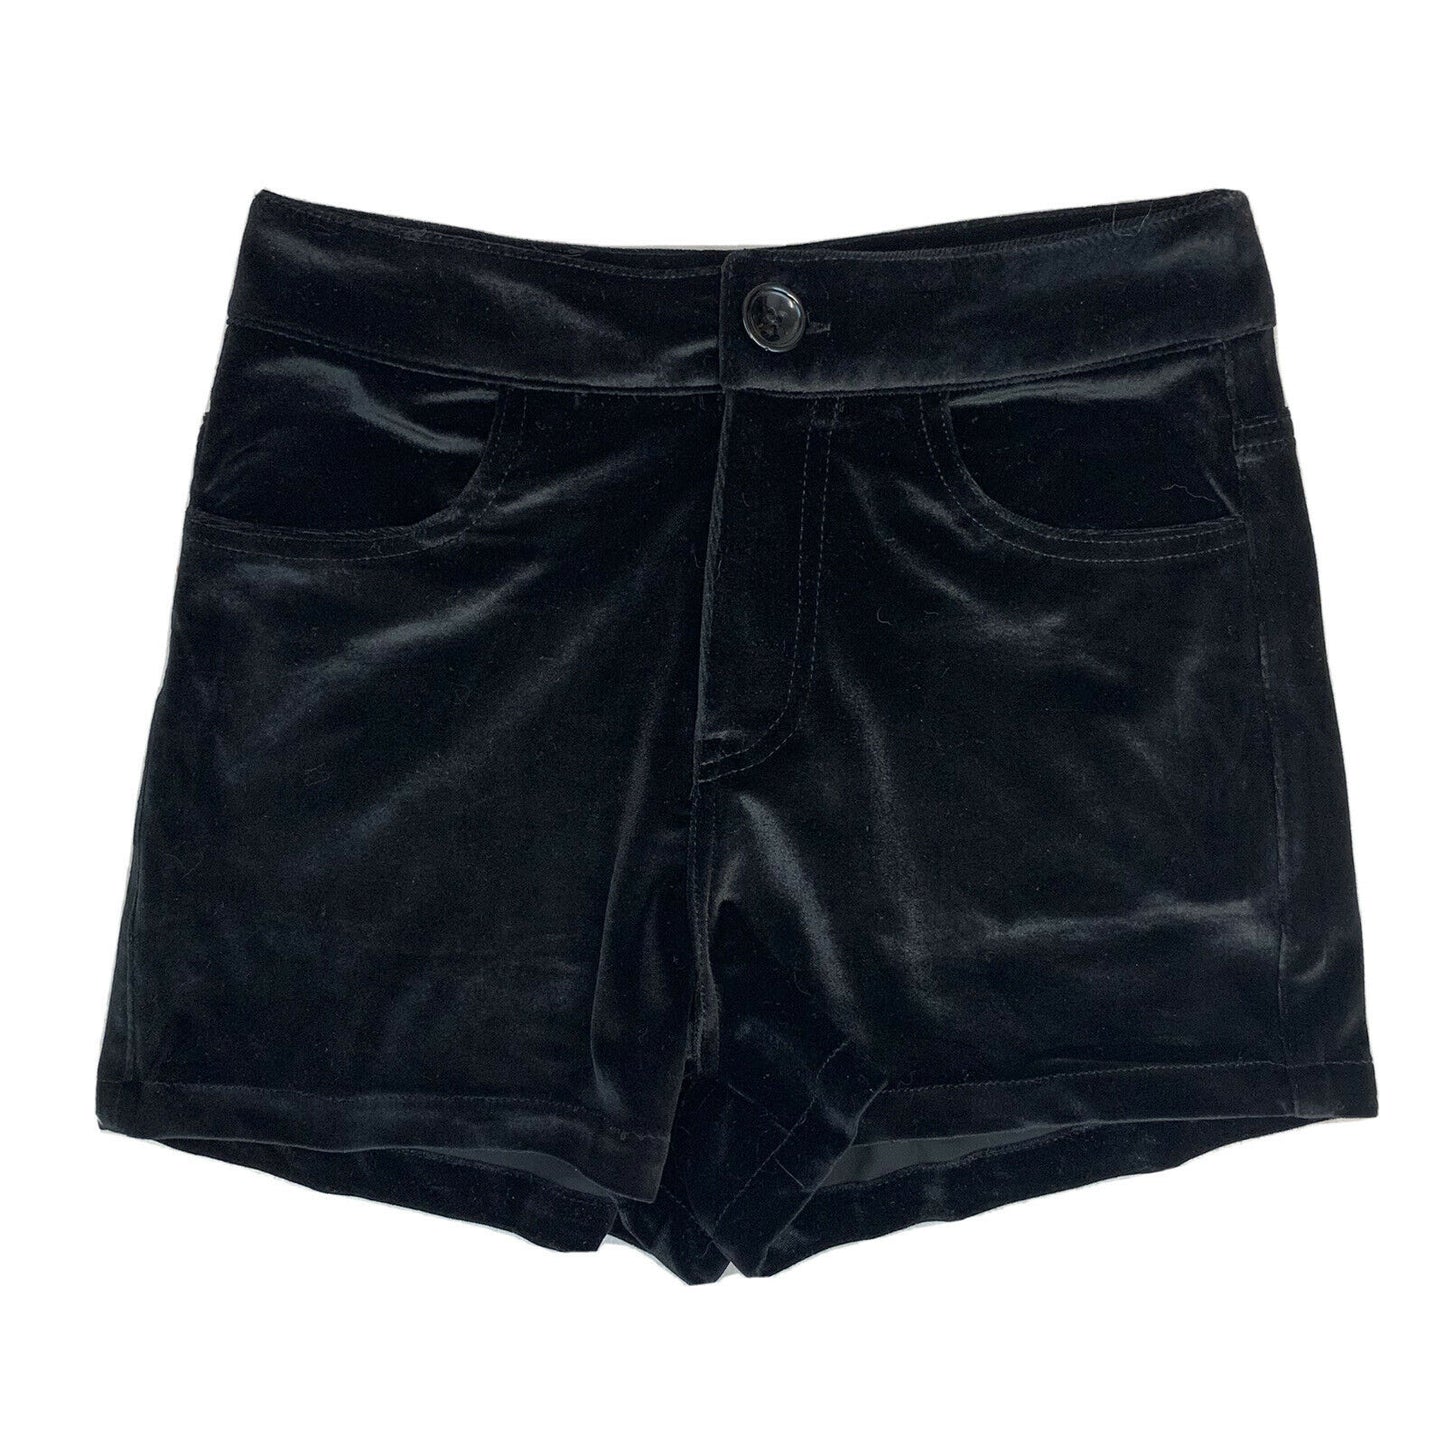 Black Cat Shorts